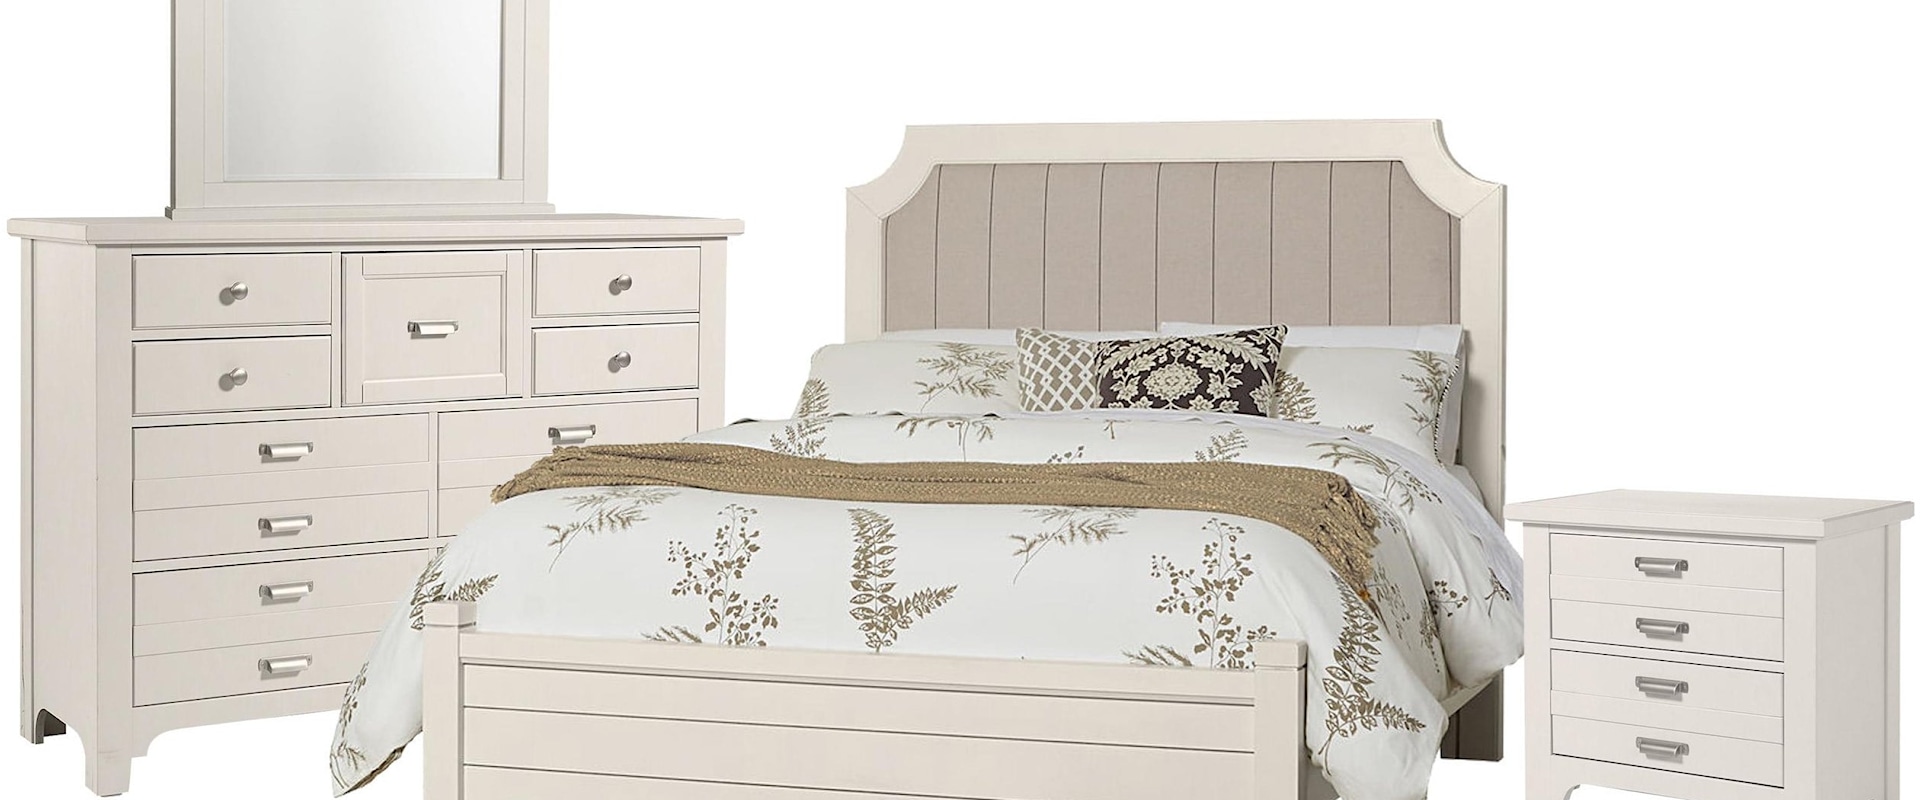 King Upholstered Bed, 9 Drawer Dresser, Master Arch Mirror, 2 Drawer Nightstand